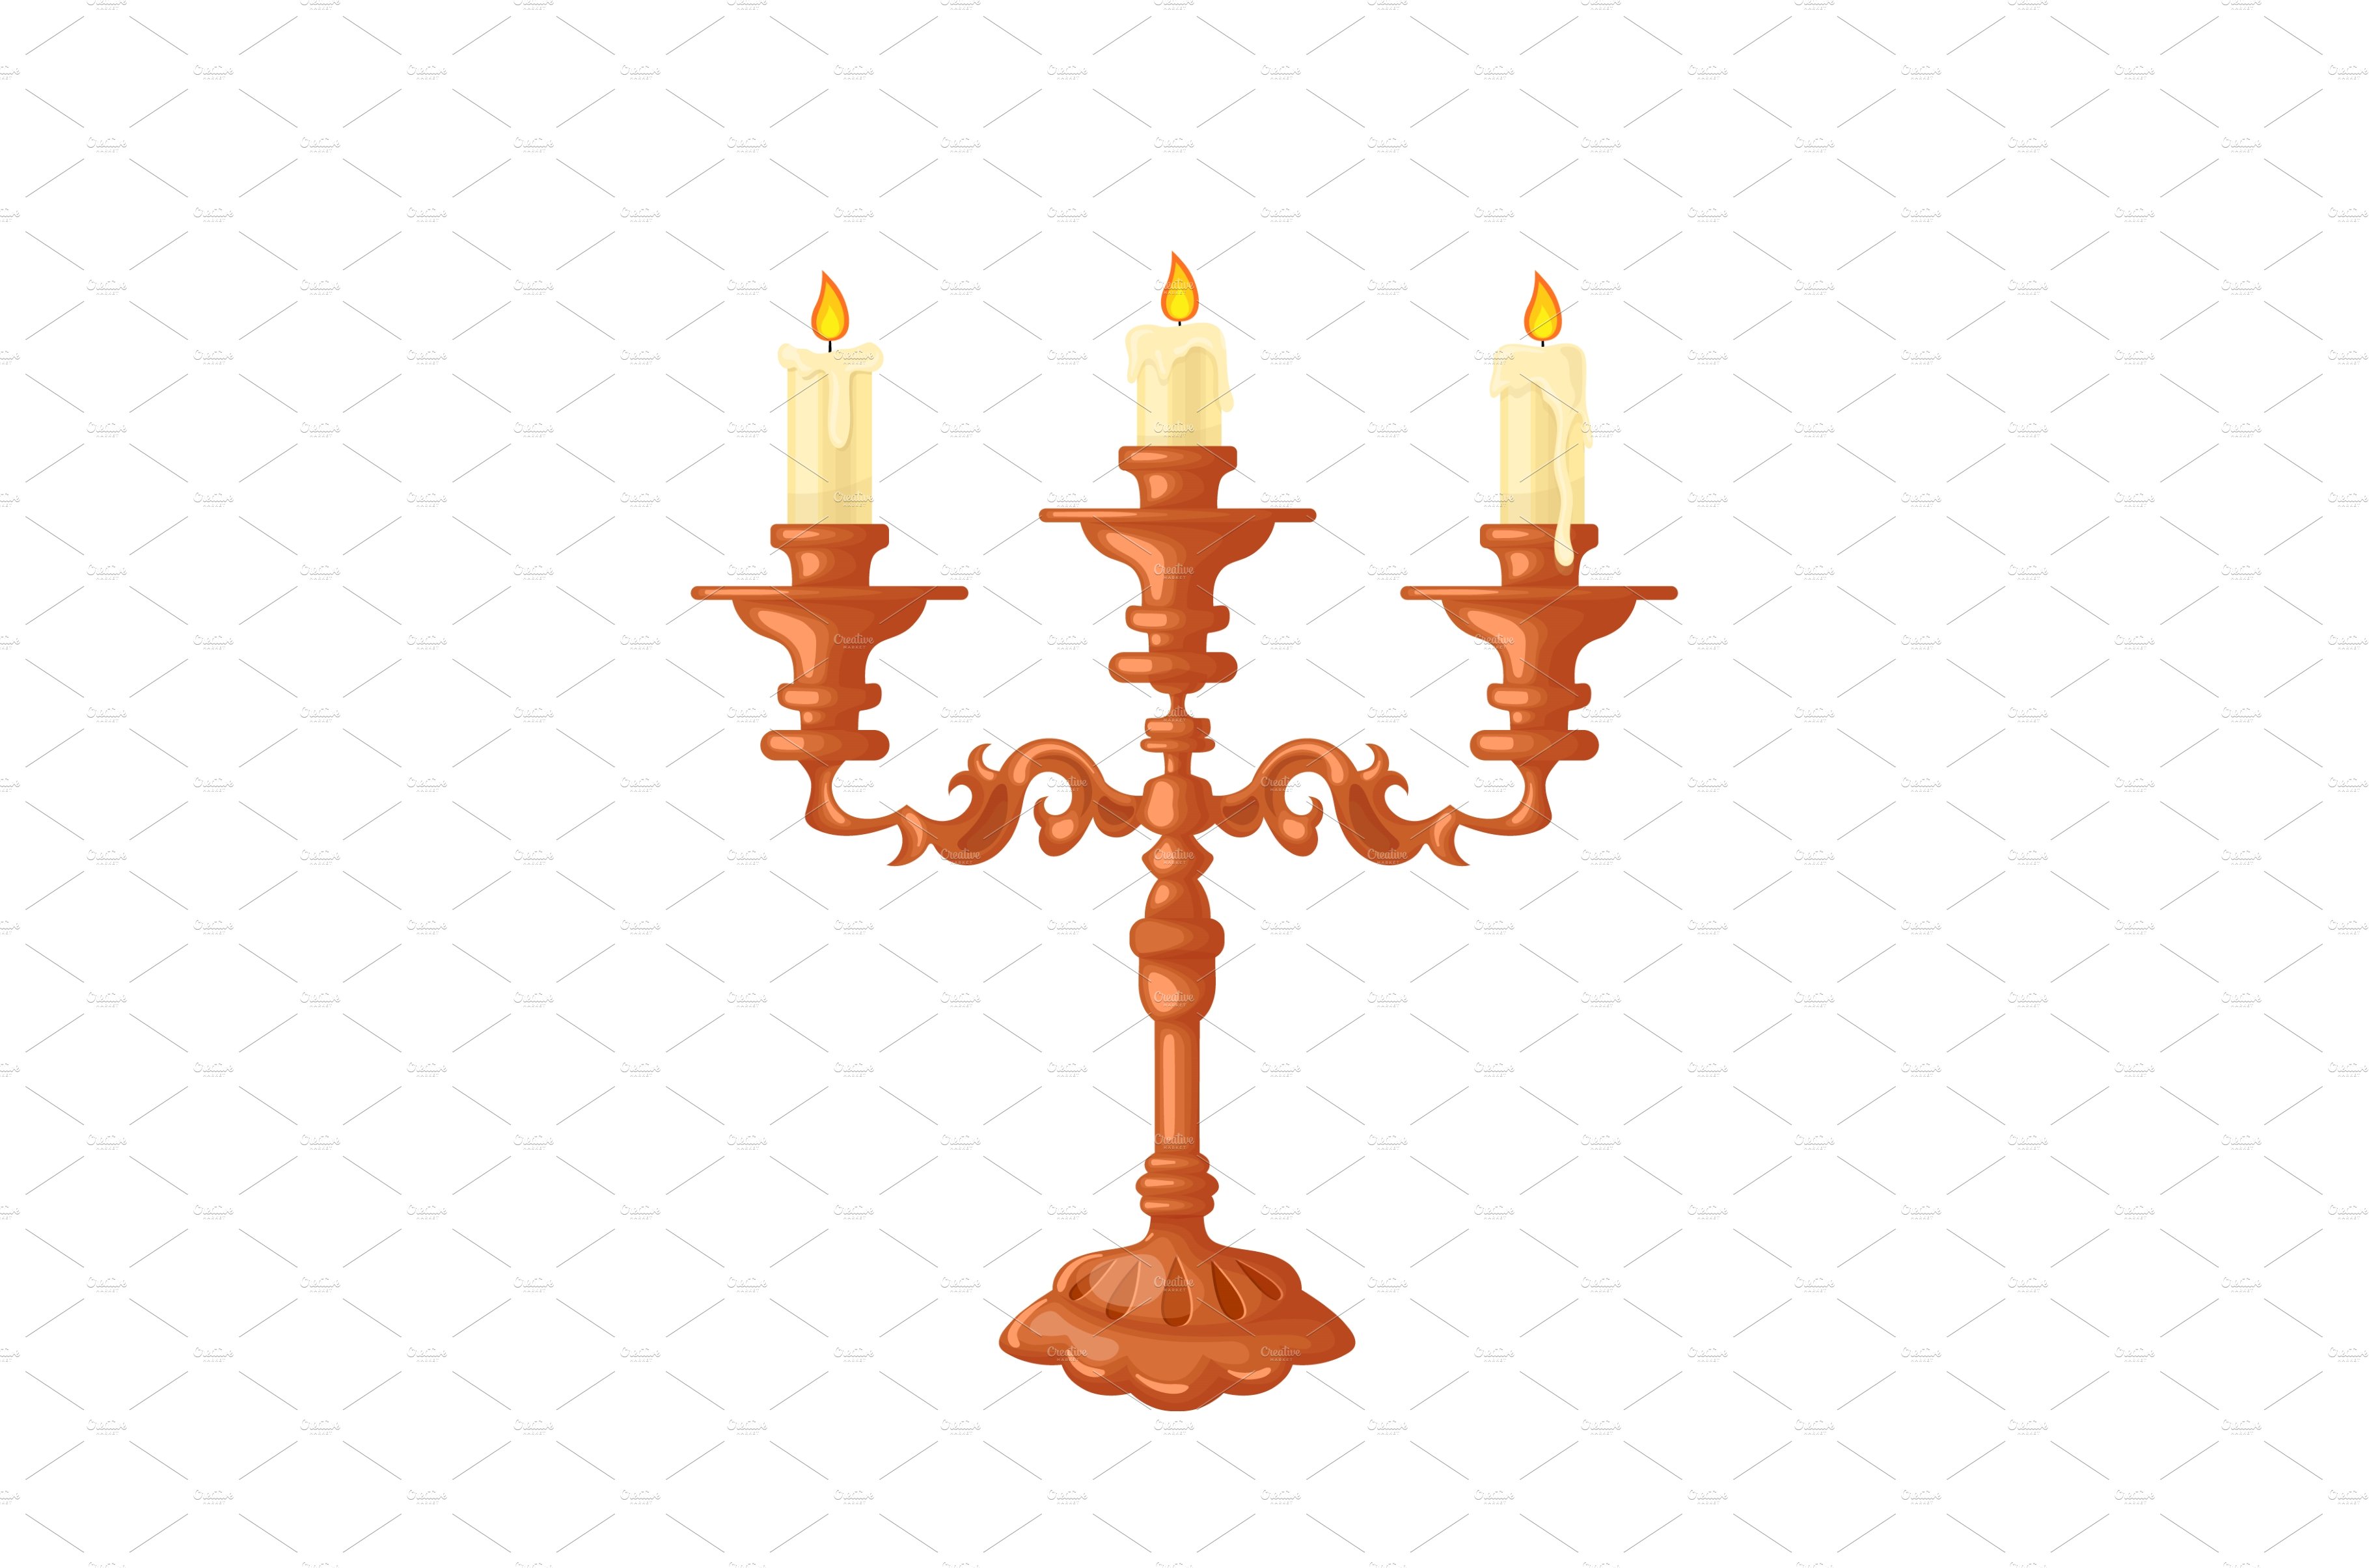 candlestick candelabrum cartoon cover image.